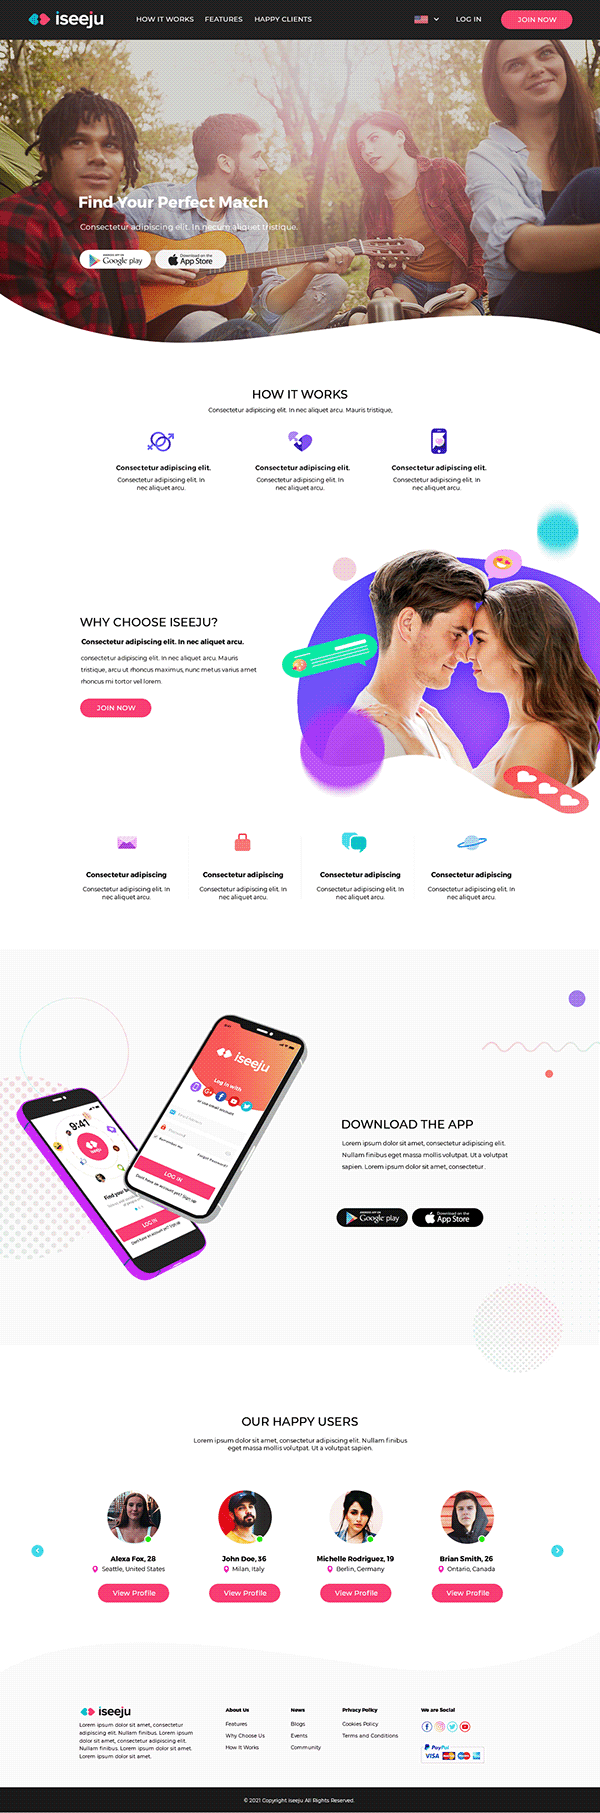 Iseeju - dating website template